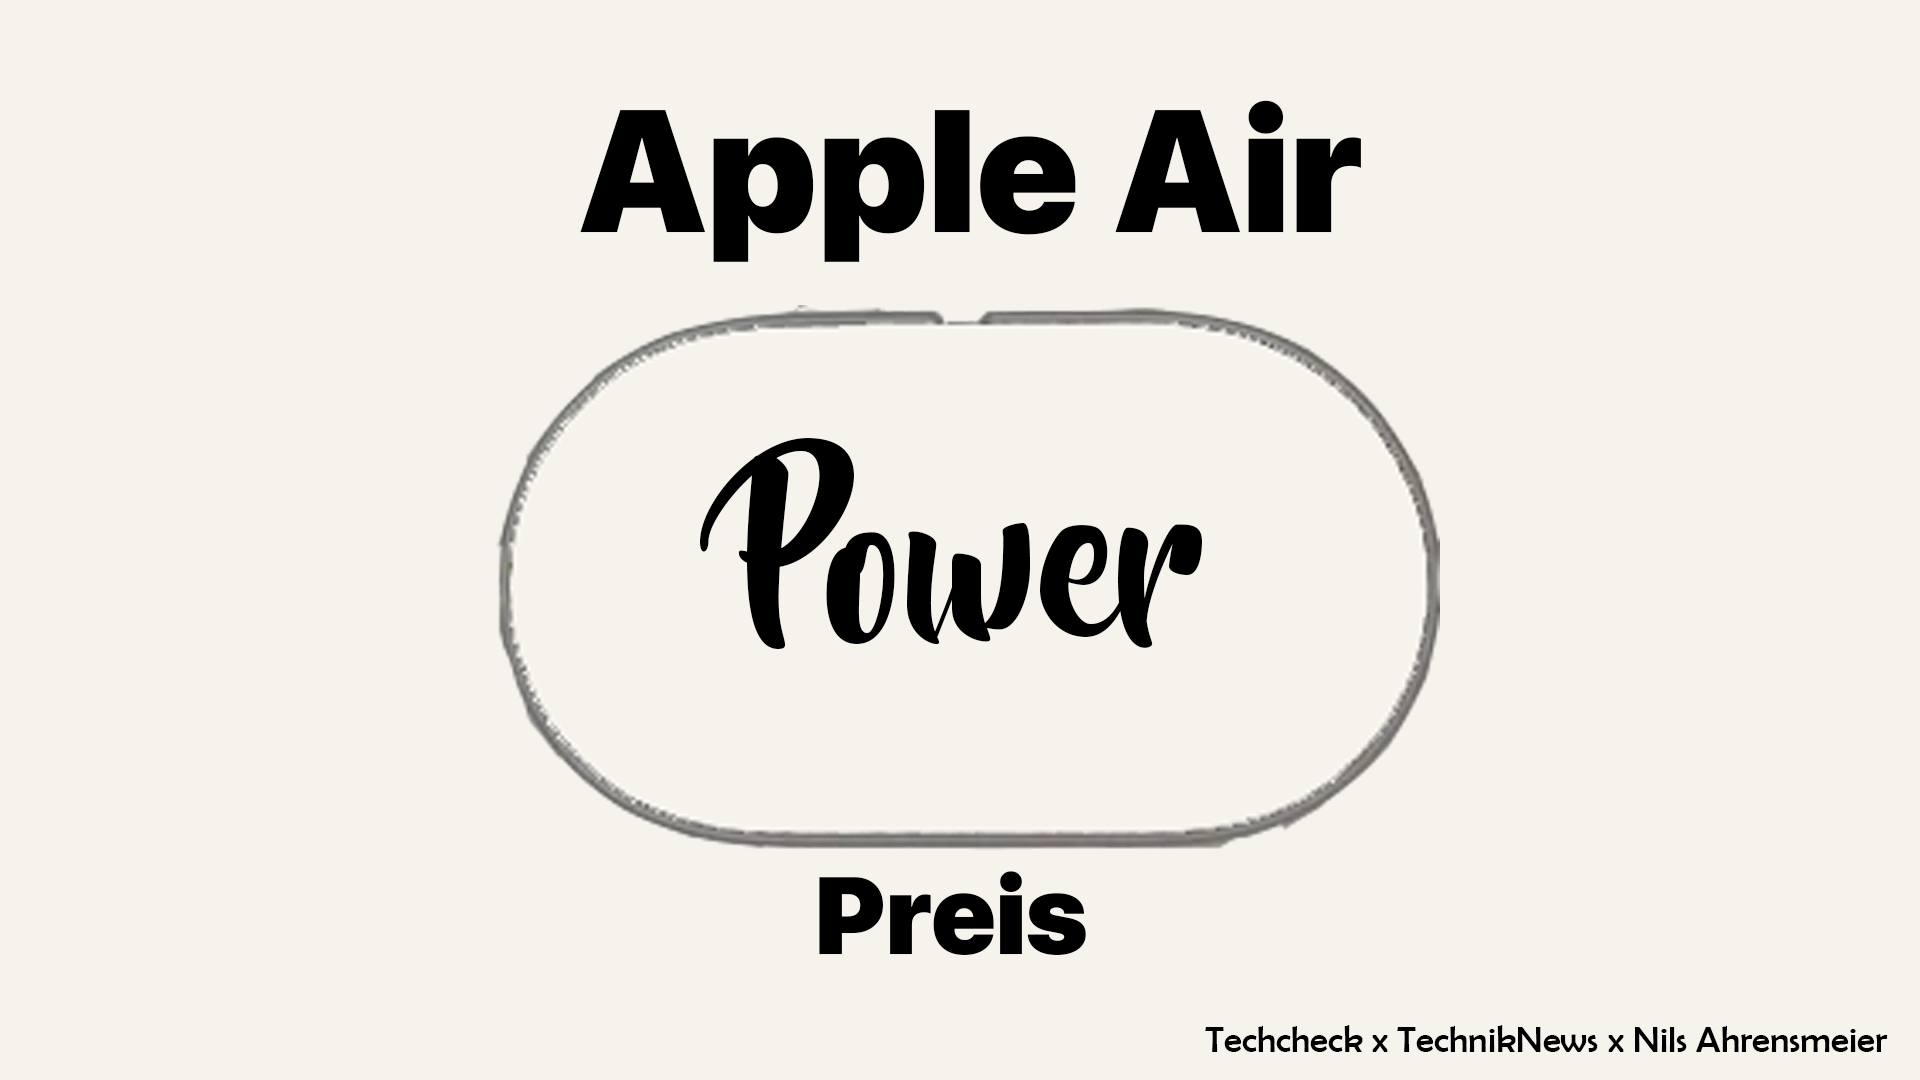 Apple AirPower price